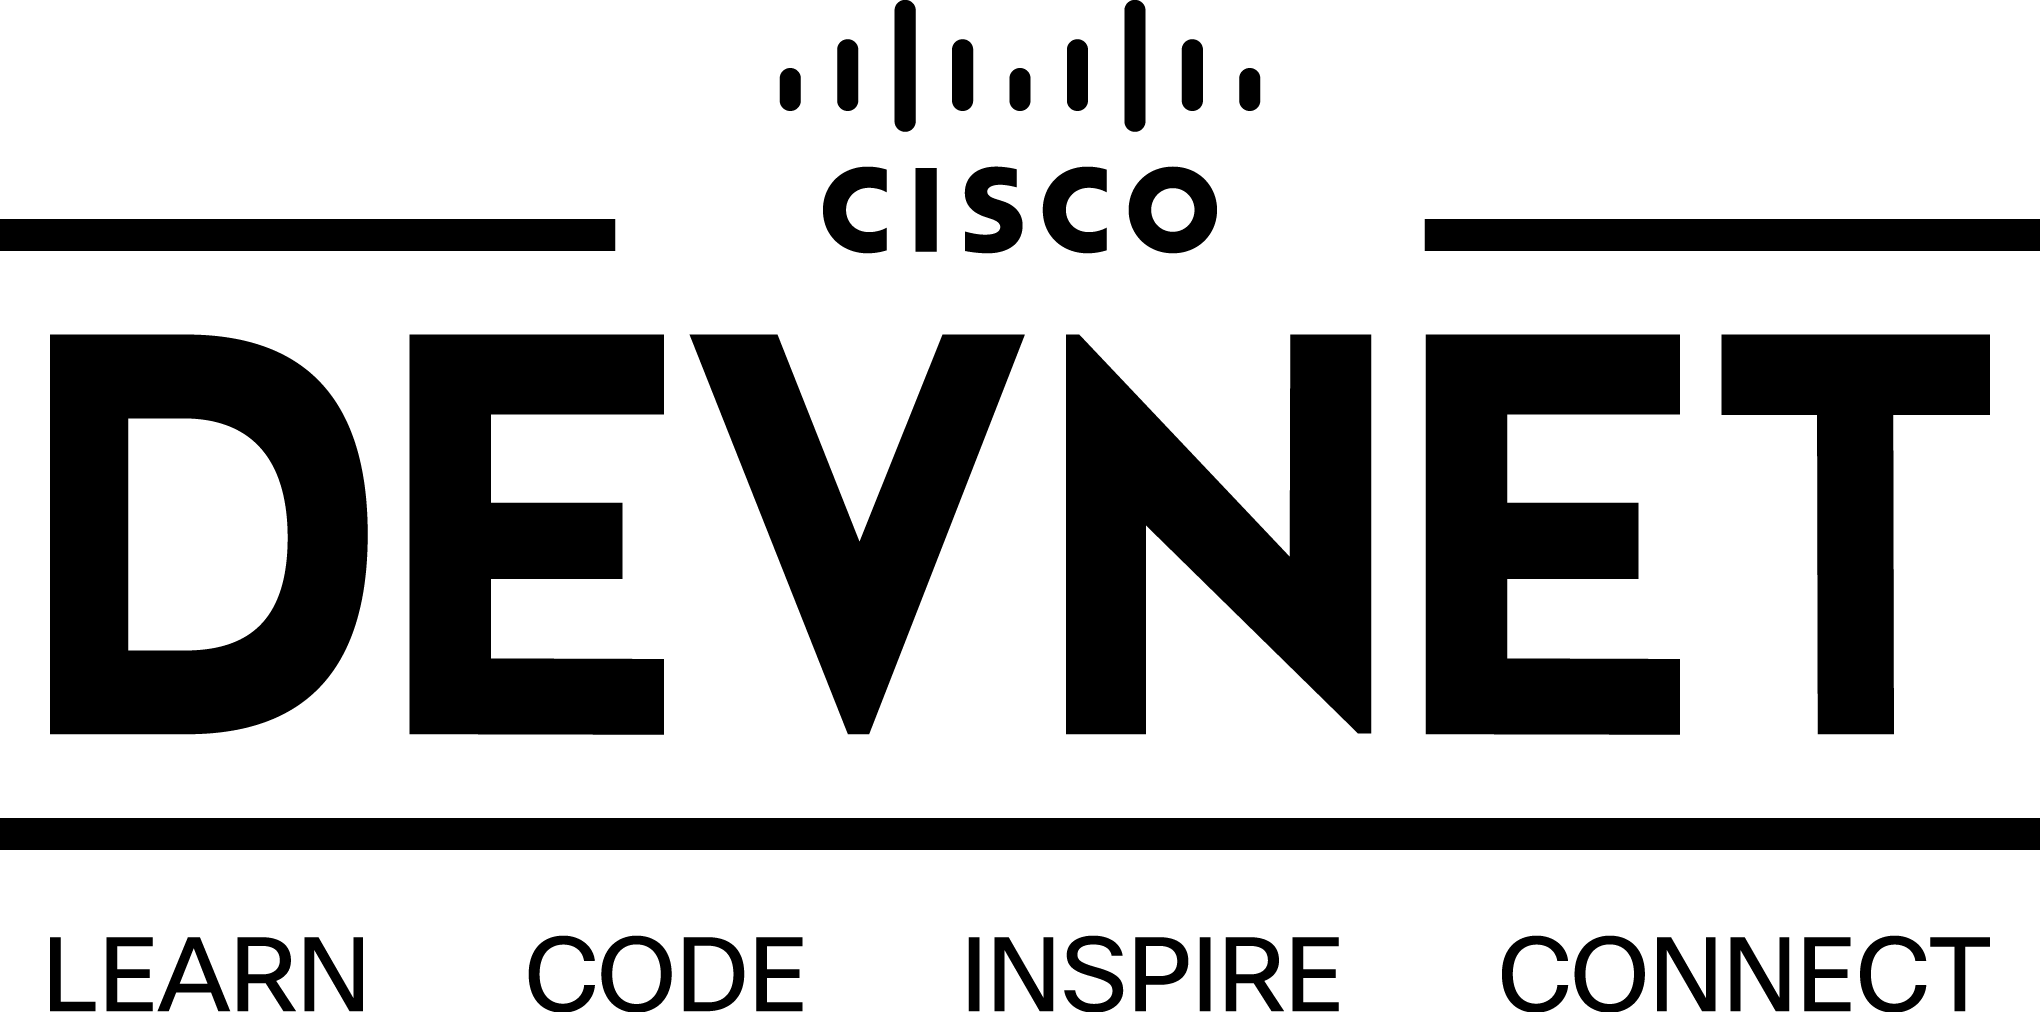 Cisco Programmability Workshop